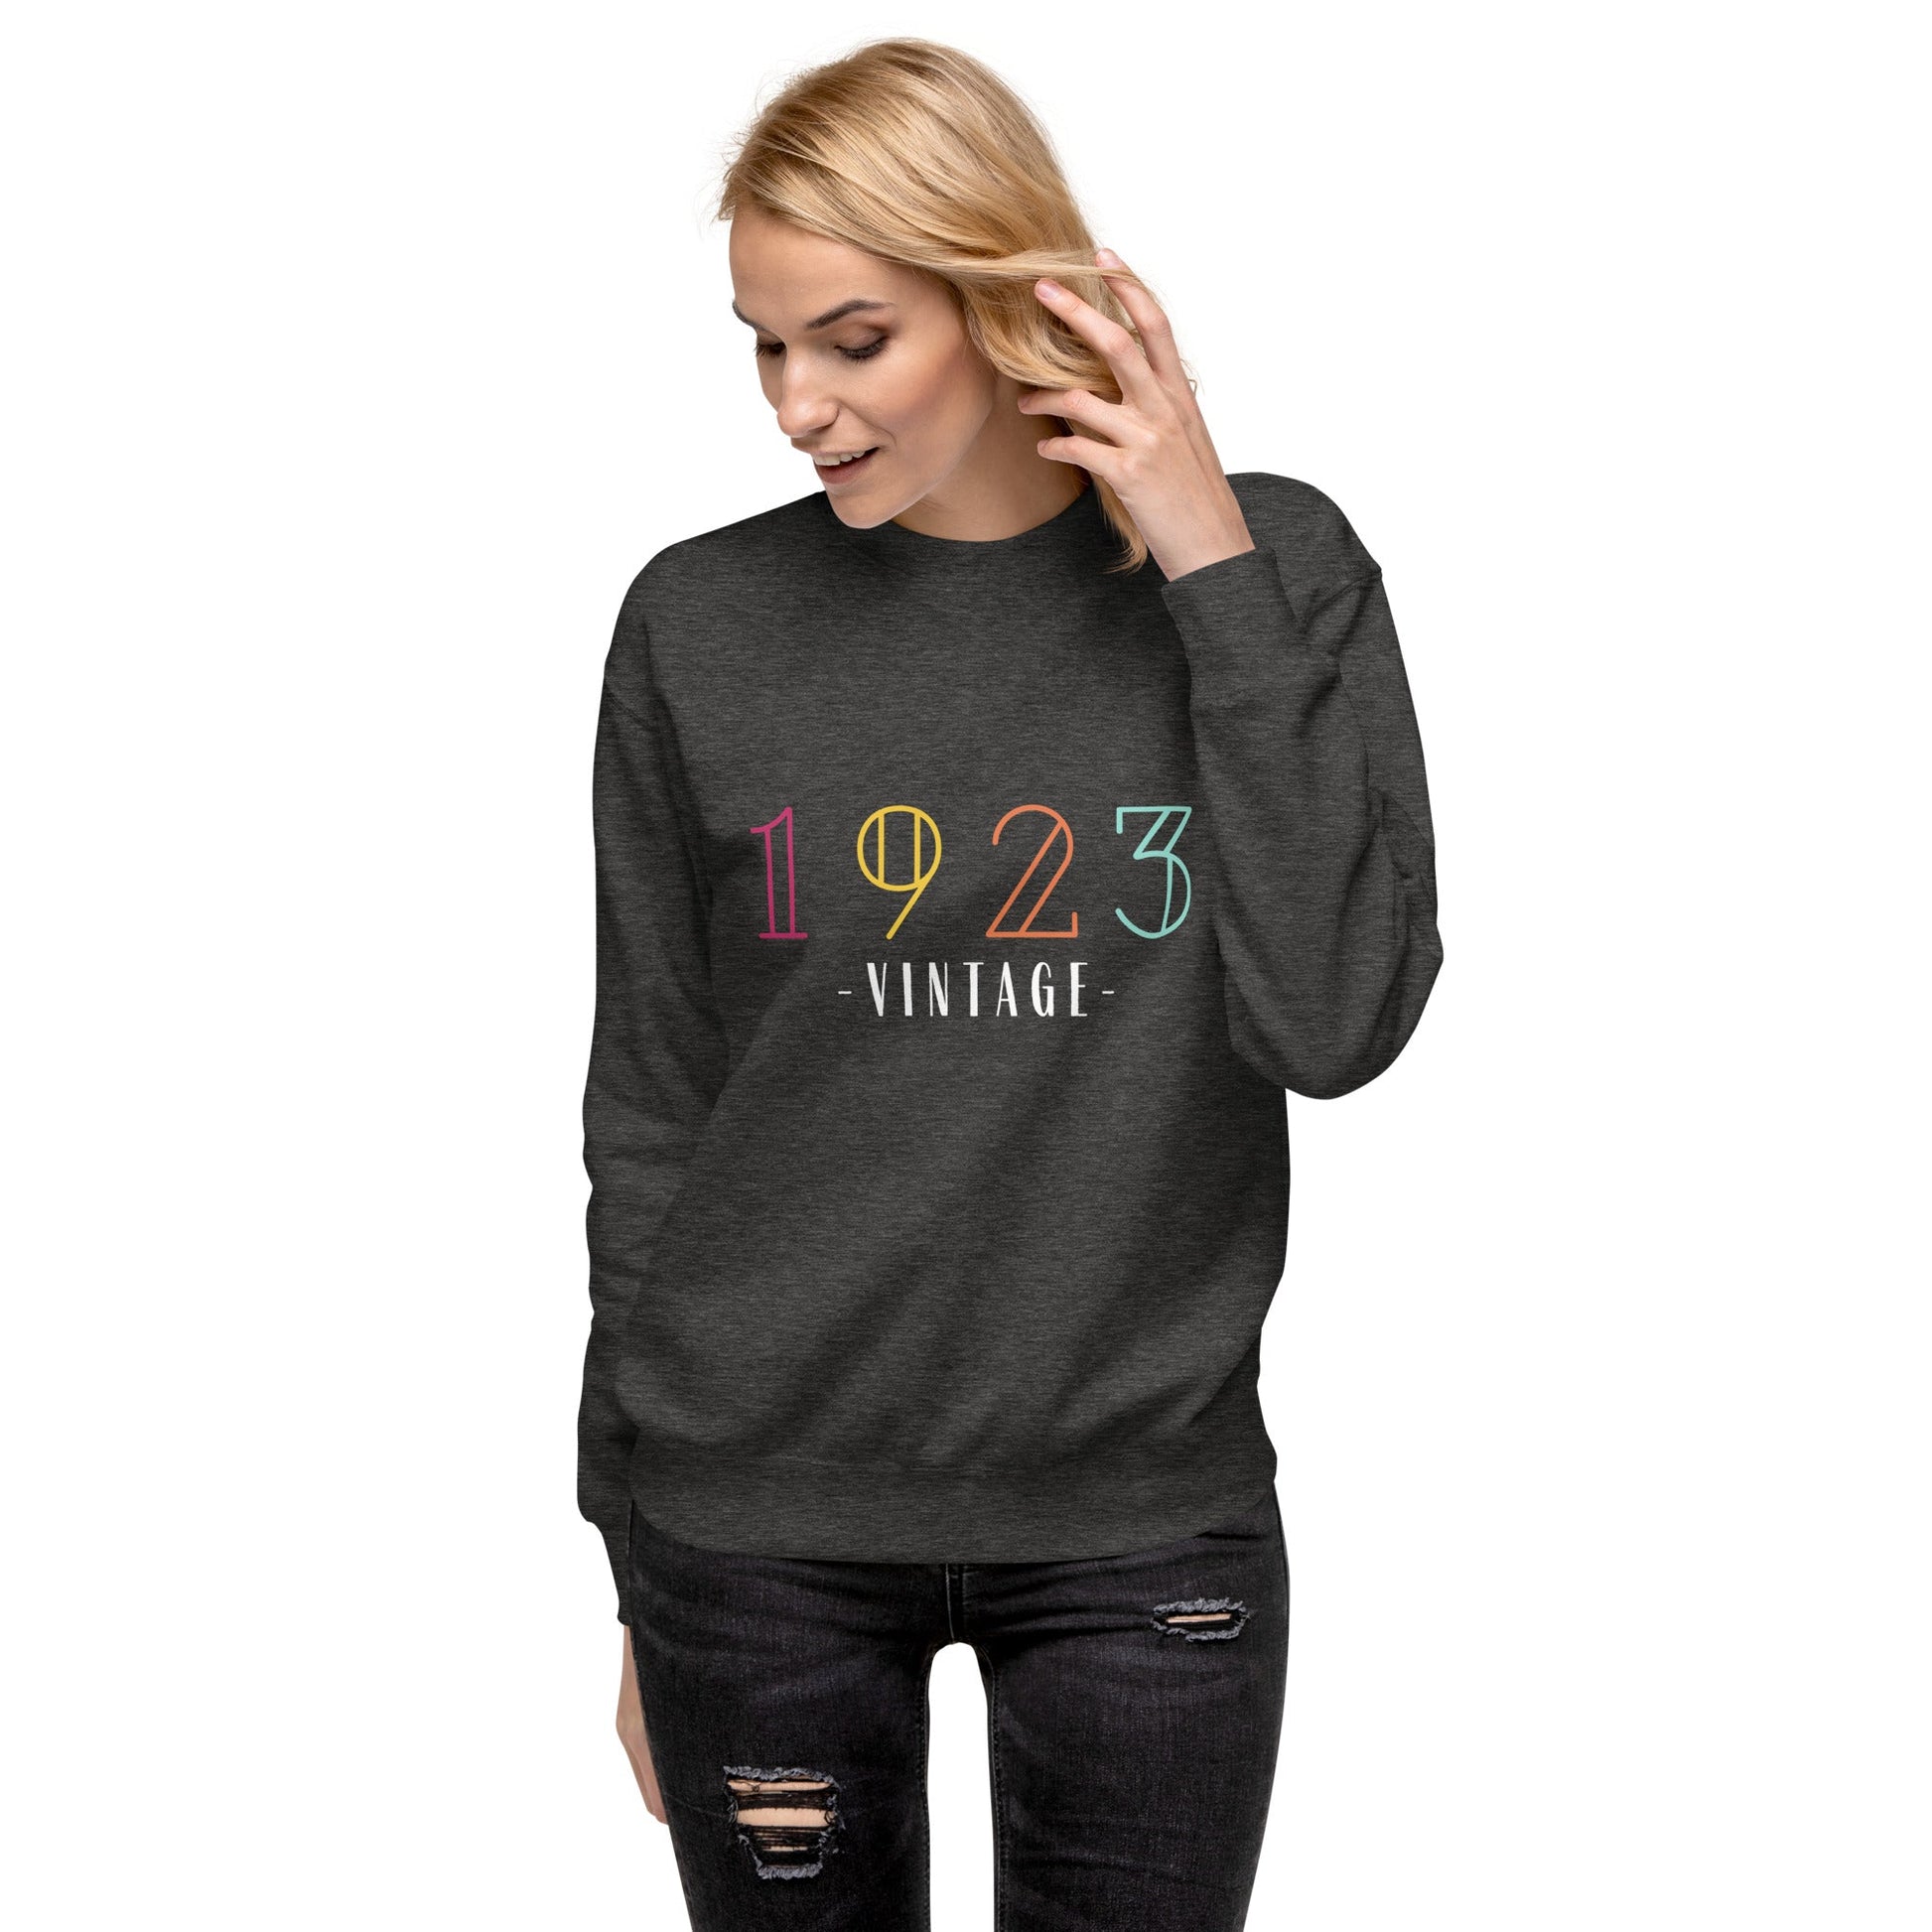 100 Year Vintage Unisex Premium Sweatshirt 100 years of wonderdisney sweatshirtsdisney trip#tag4##tag5##tag6#